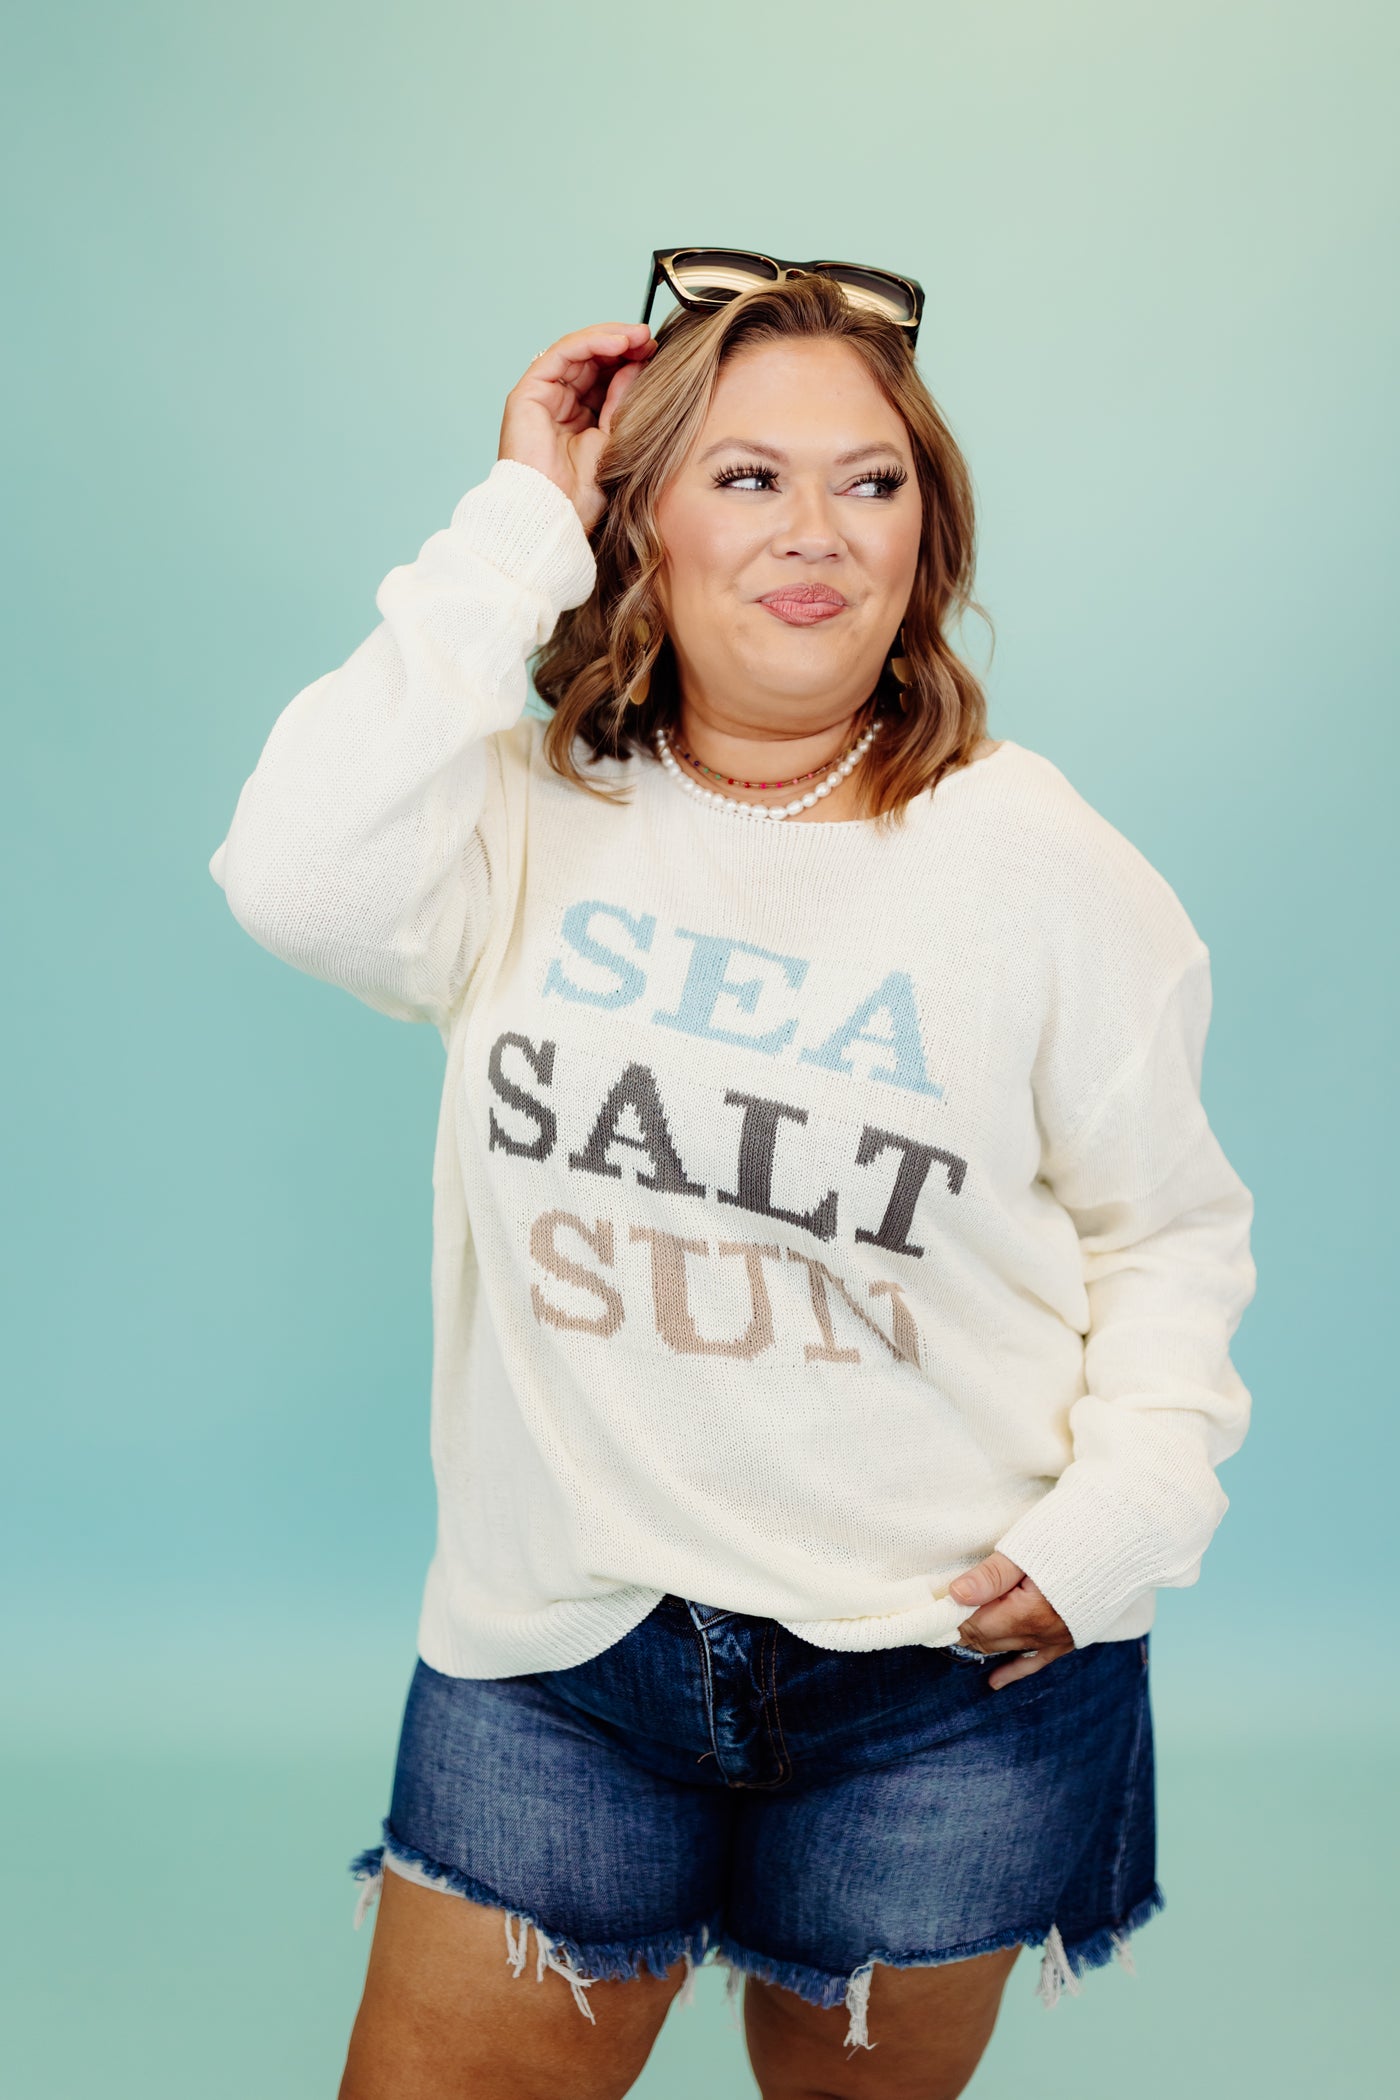 White Sea Salt Sun Round Neck Sweater